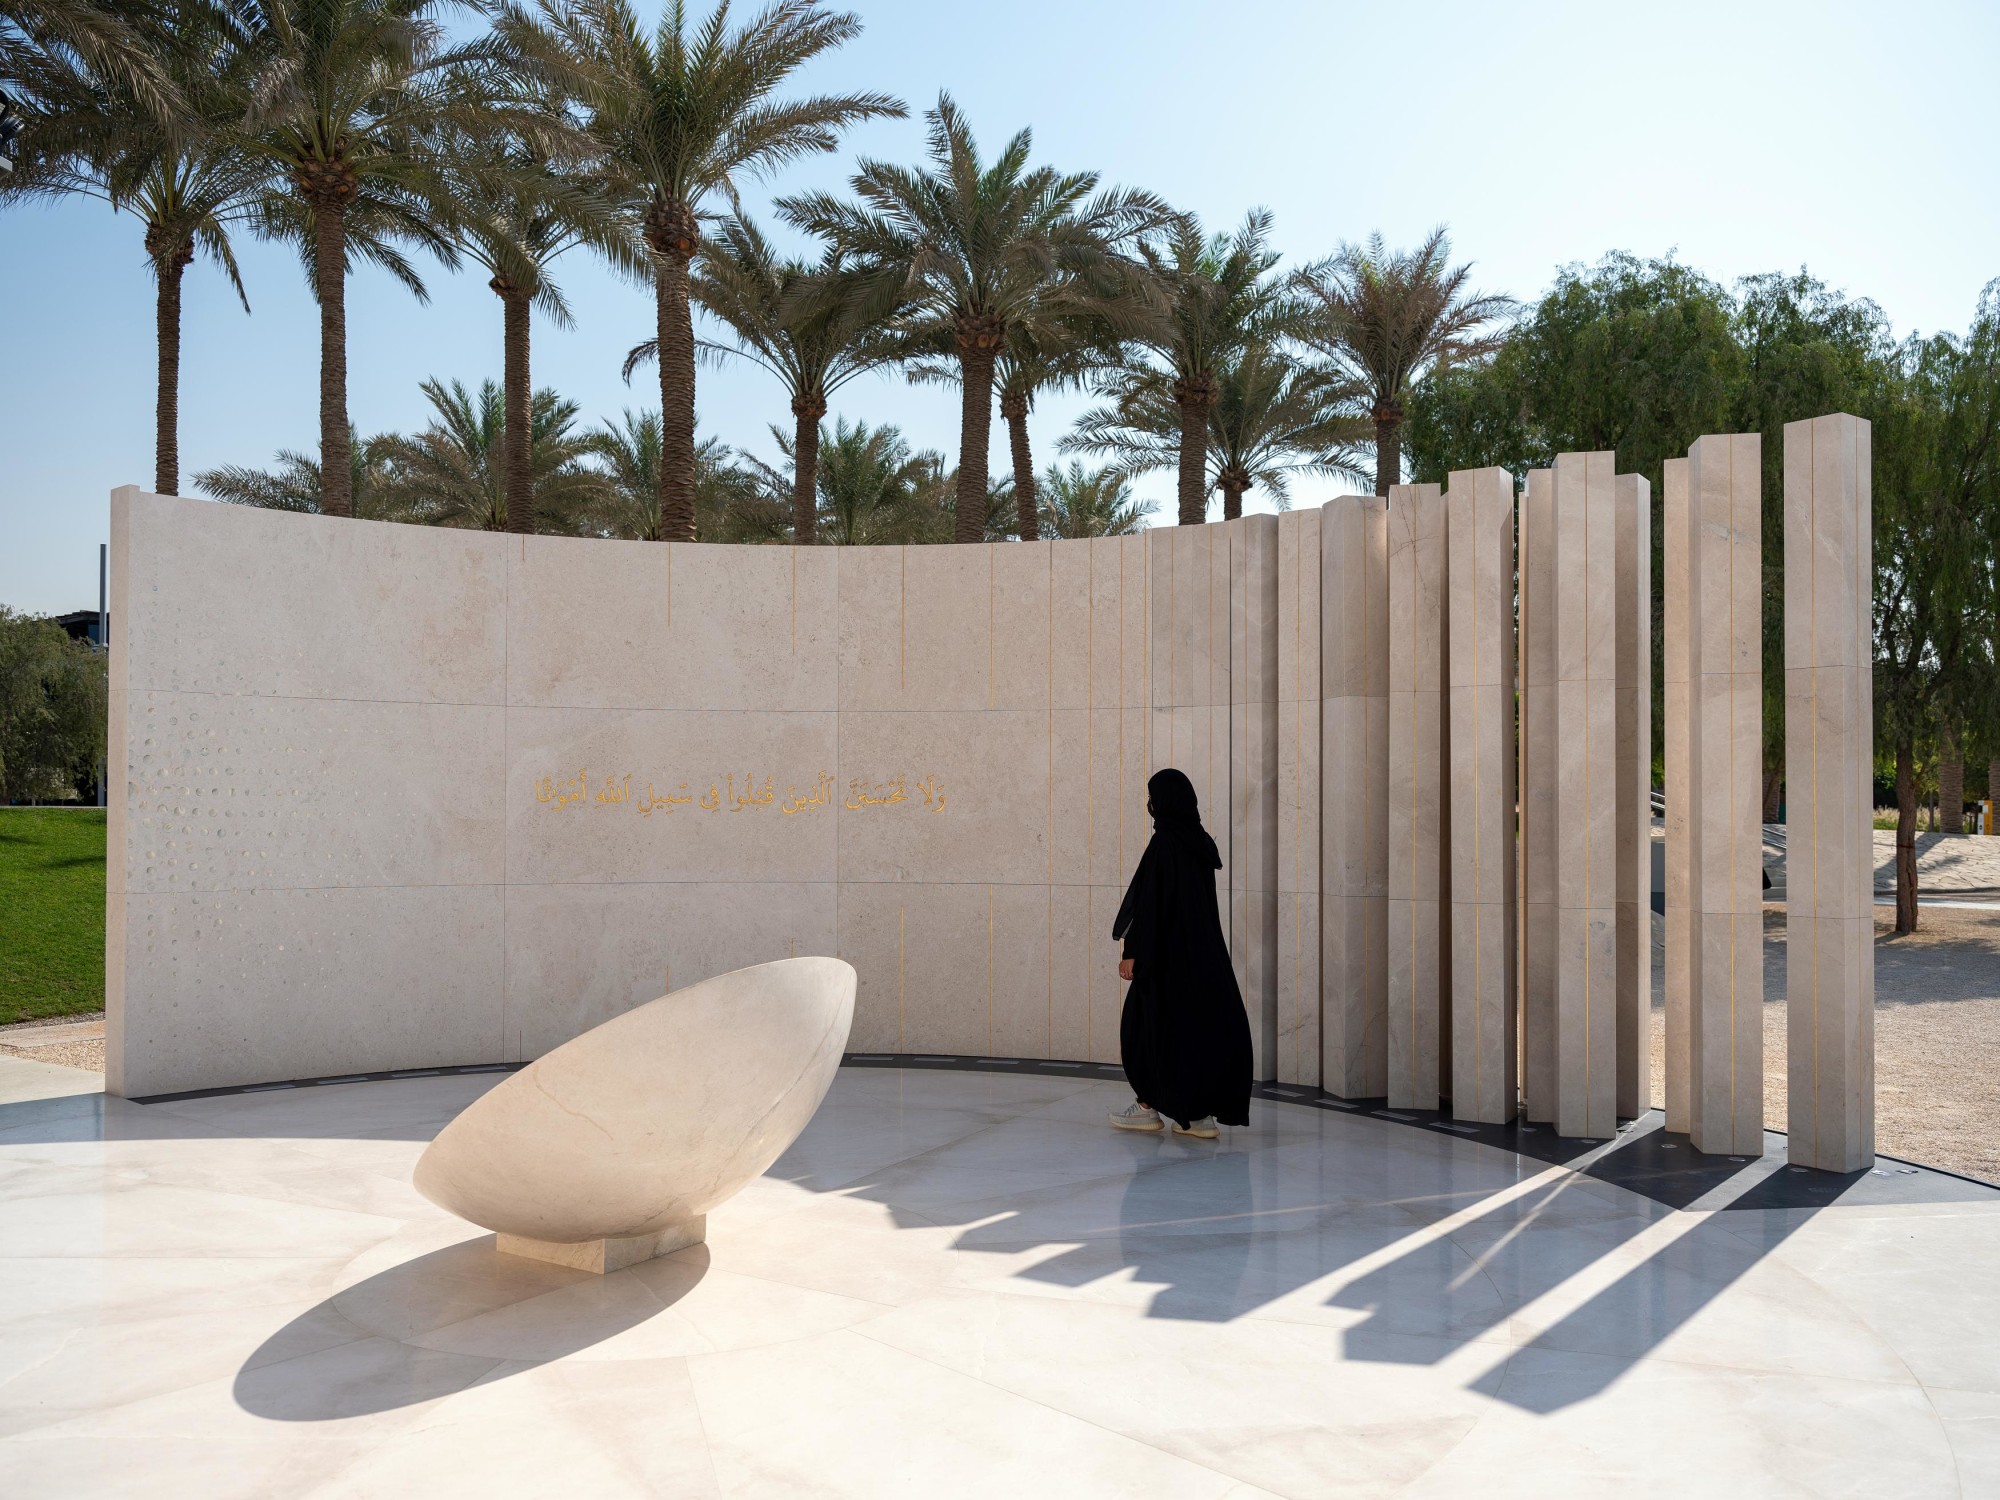 Martyr-s Sculpture Peace Memorial outside the UAE Pavilion m13116